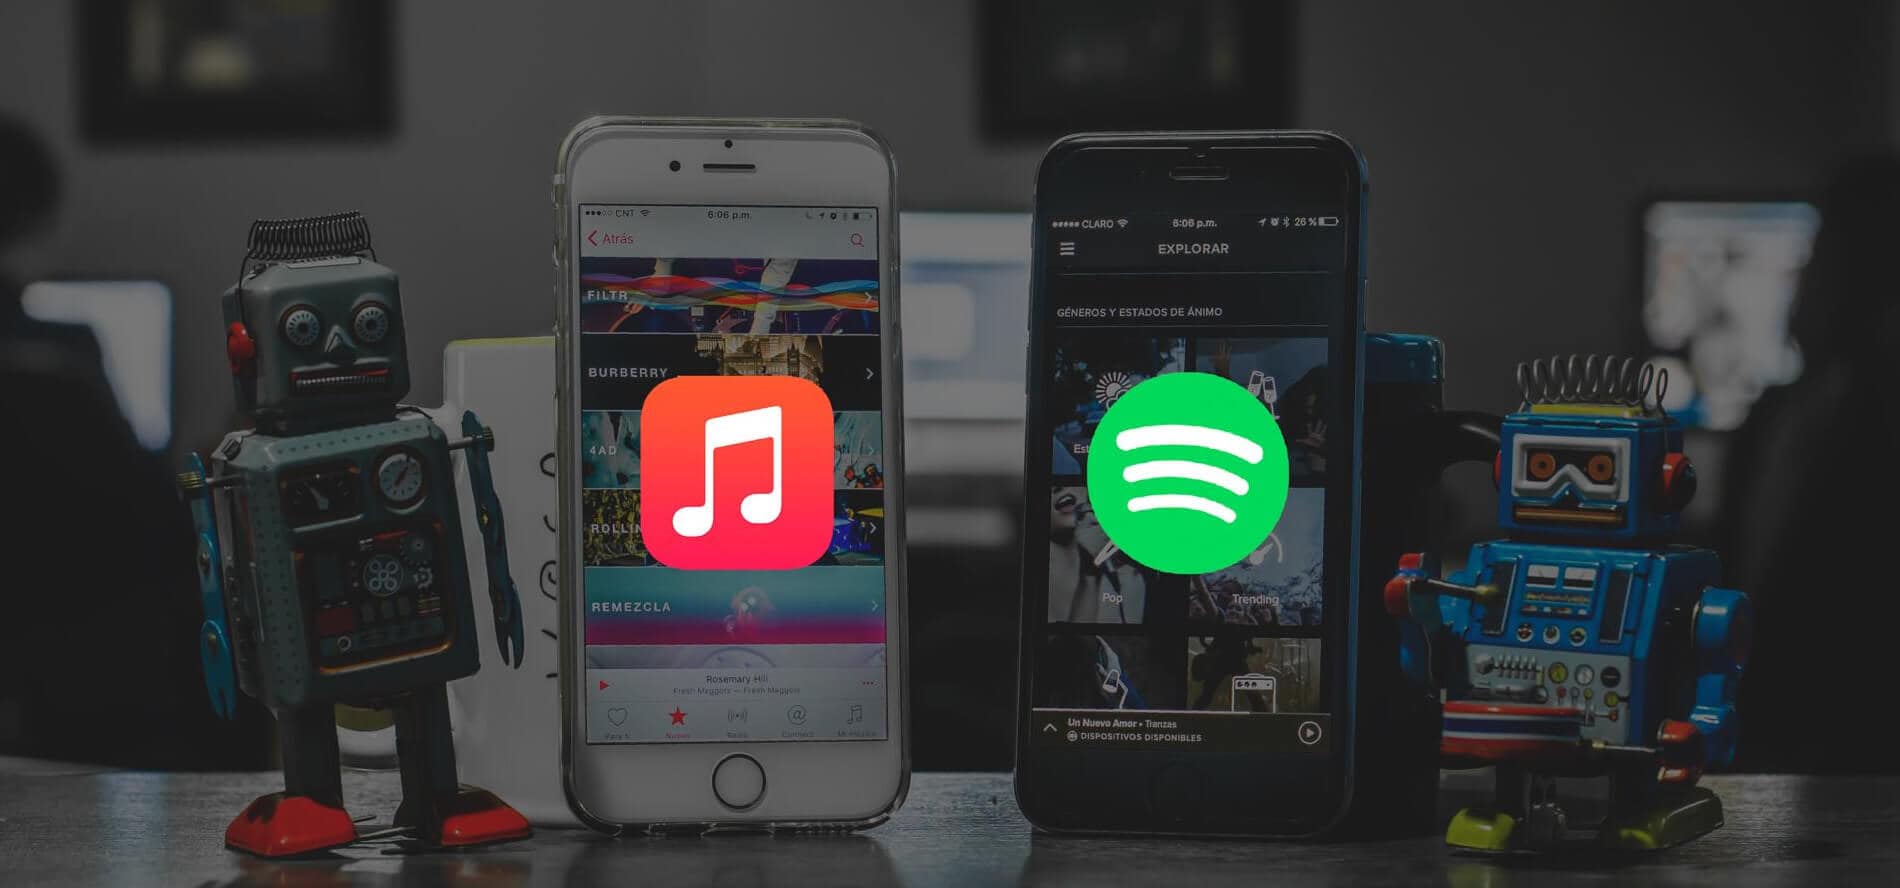 Apple Music VS Spotify